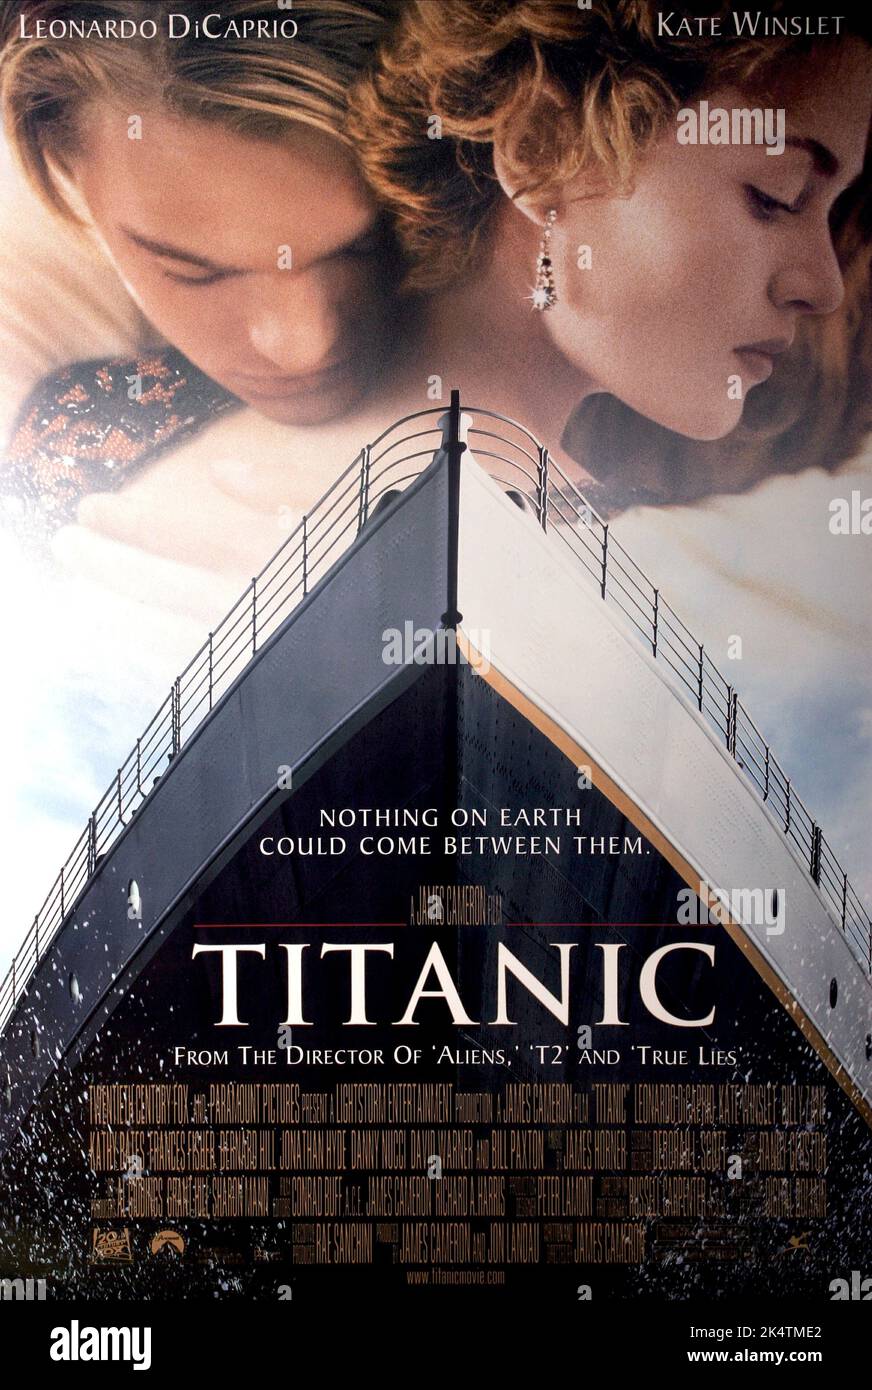 Titanic 1997. Affiche du film Titanic. Leonardo DiCaprio, Kate Winslet Banque D'Images